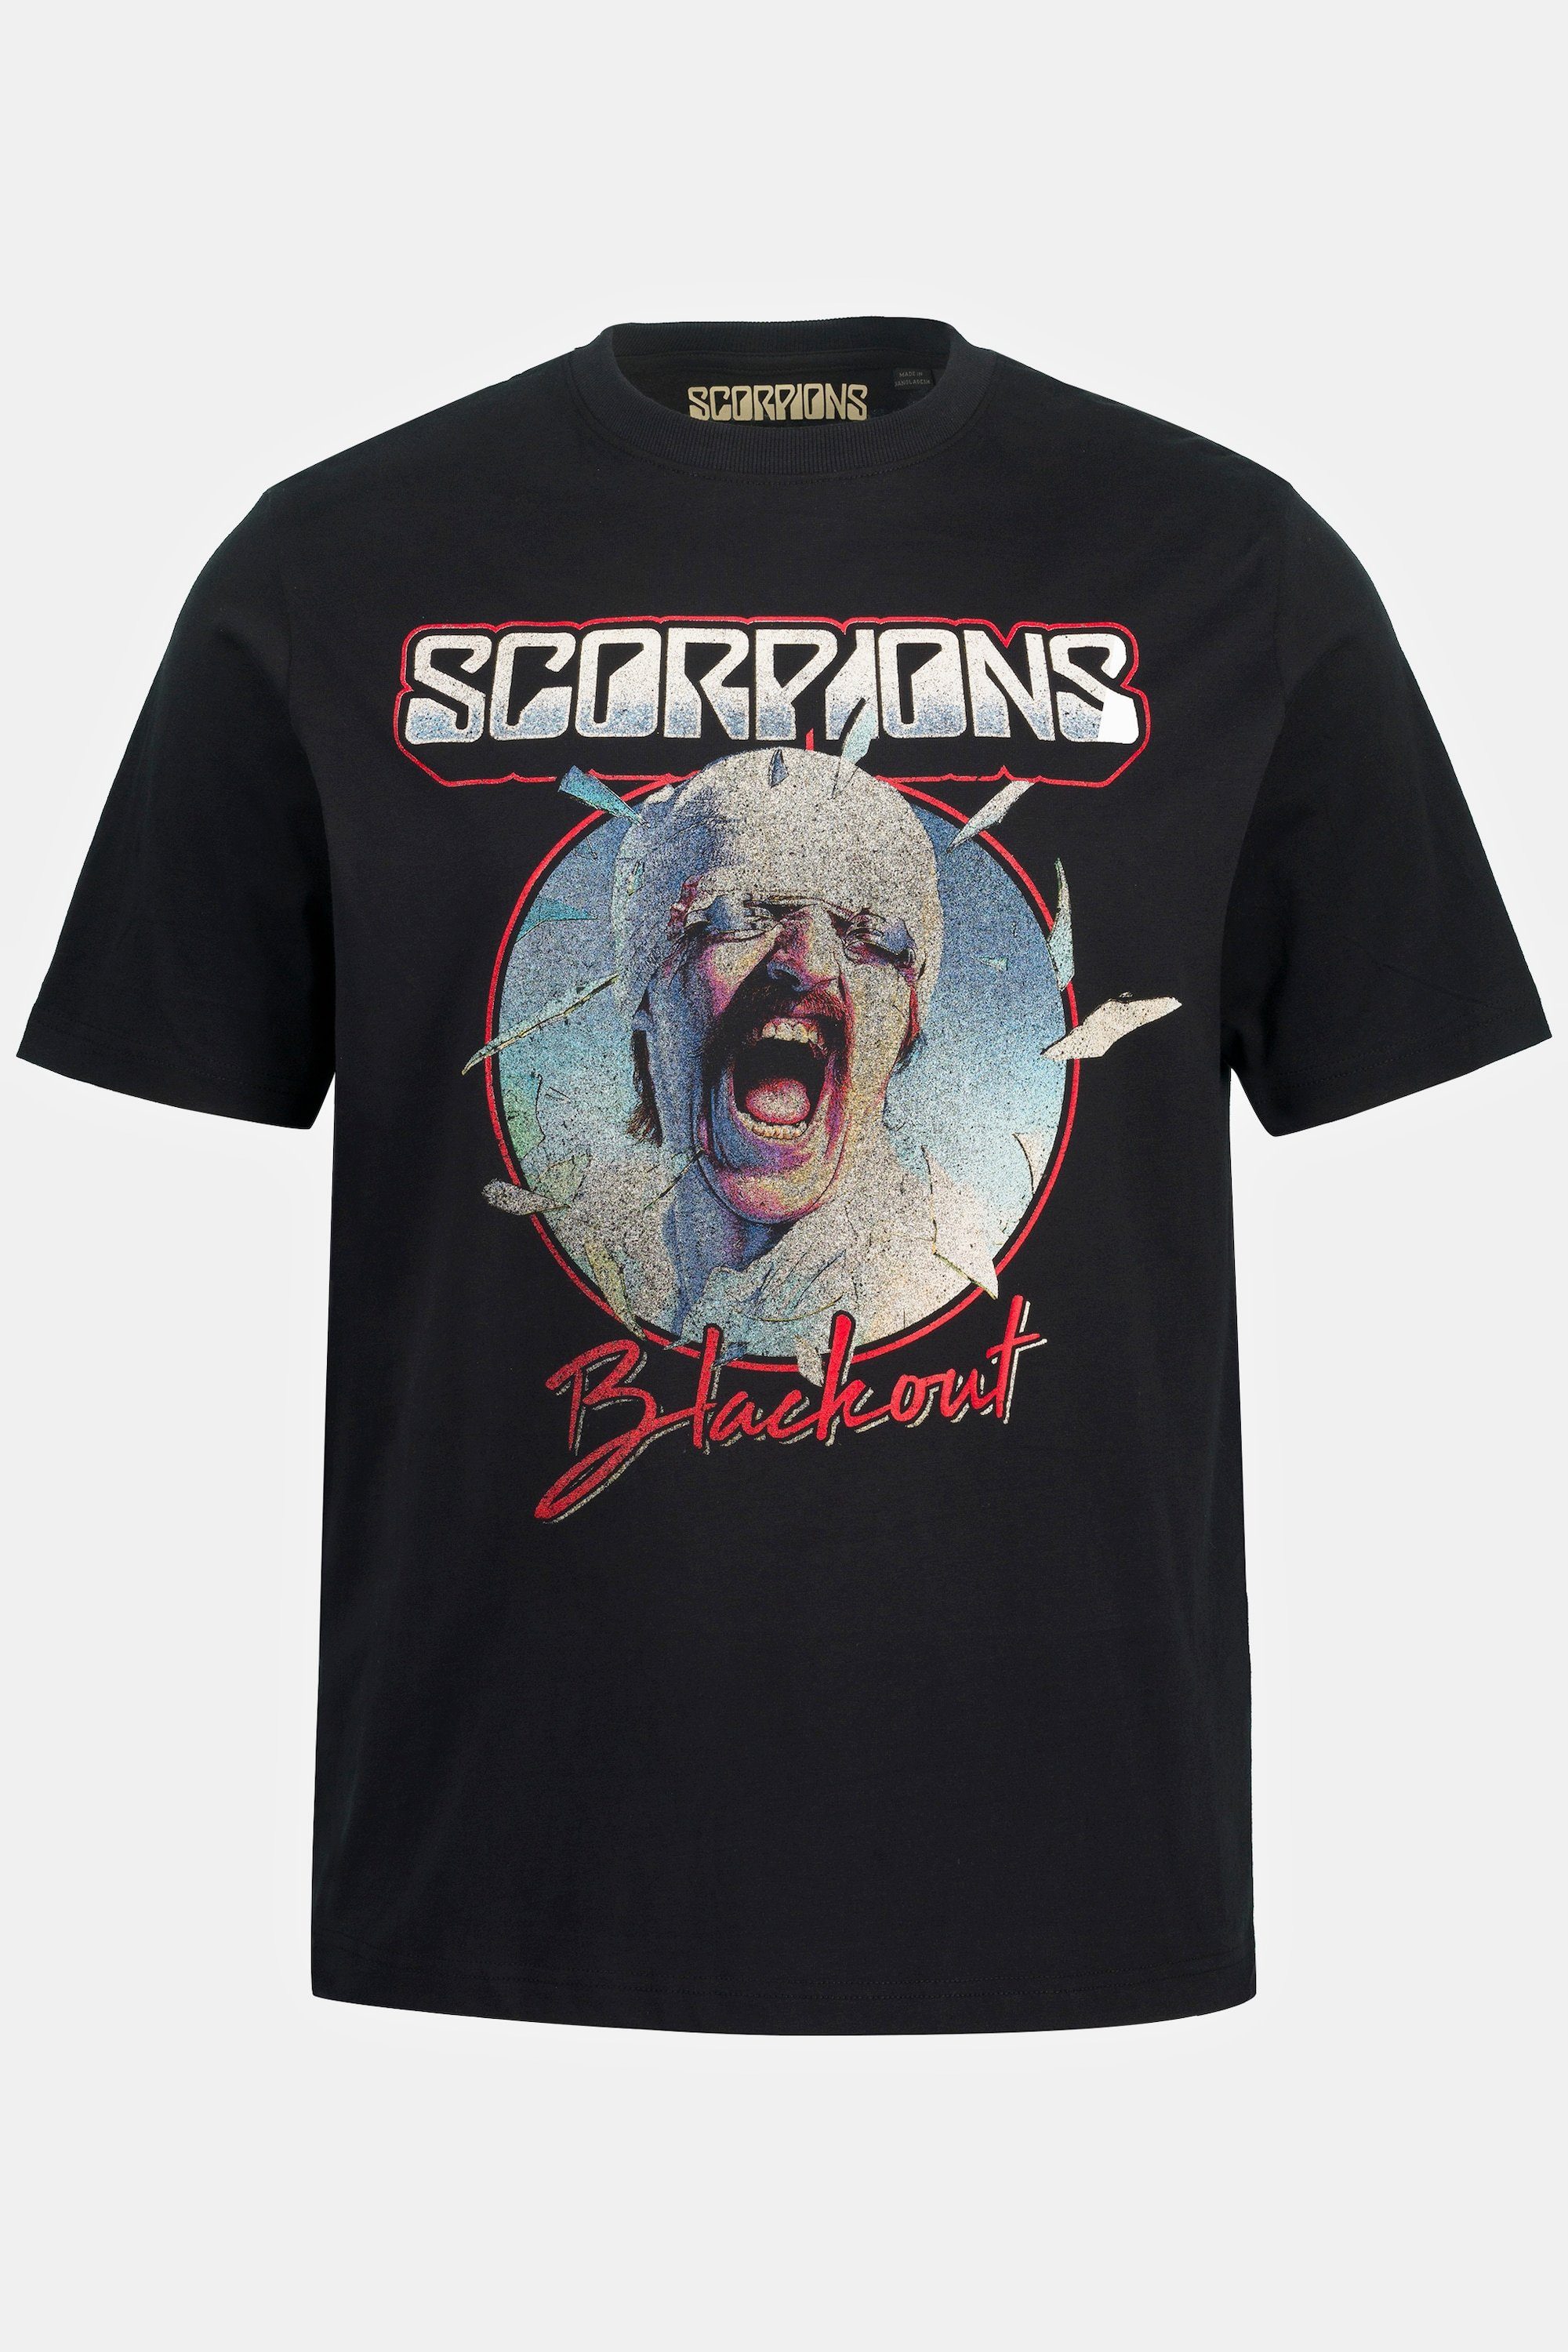 Scorpions Bandshirt T-Shirt JP1880 T-Shirt Halbarm